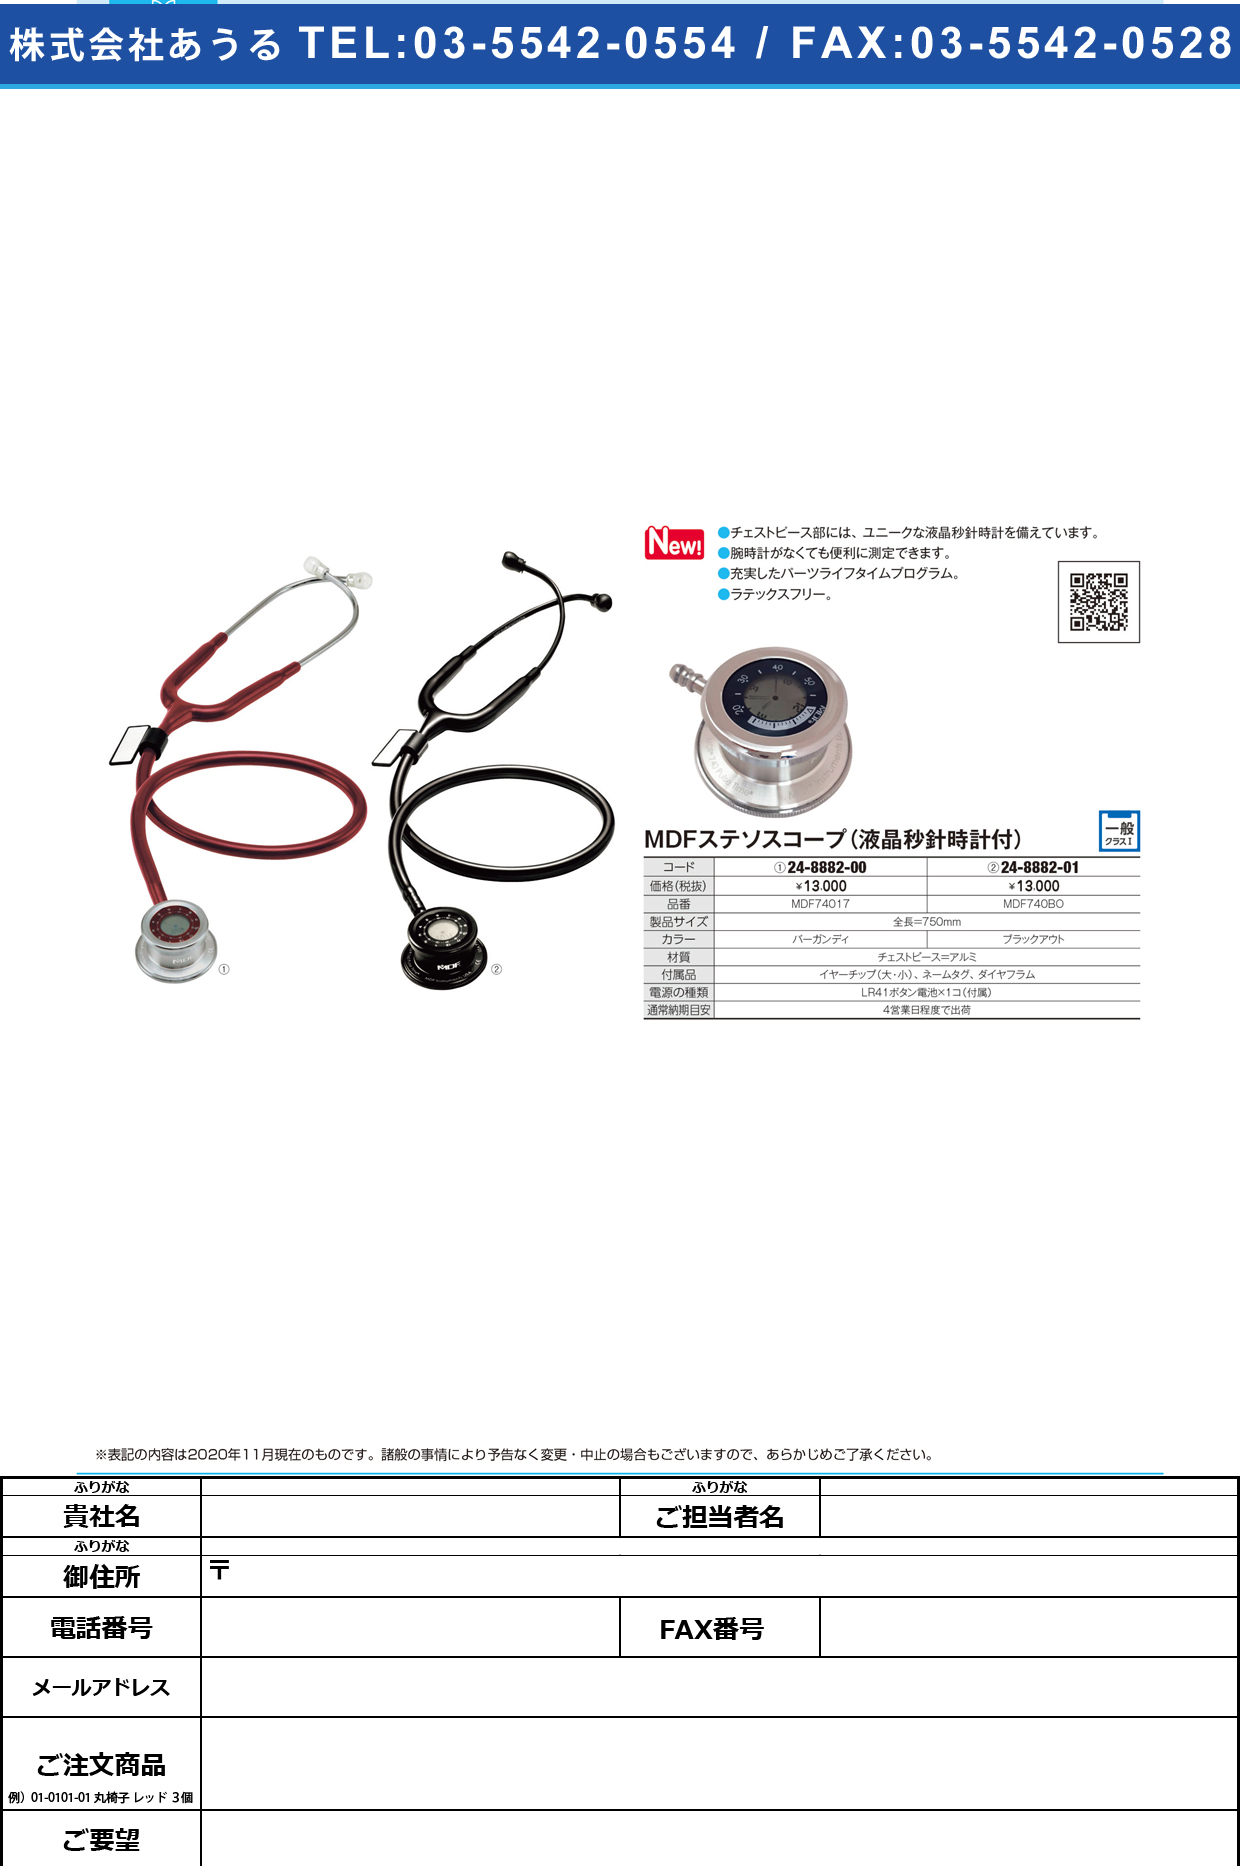 MDF聴診器(液晶秒針時計付き) MDF740BO(ブラック)MDF740BO(ﾌﾞﾗｯｸ)(24-8882-01)【ミハマメディカル】(販売単位:1)